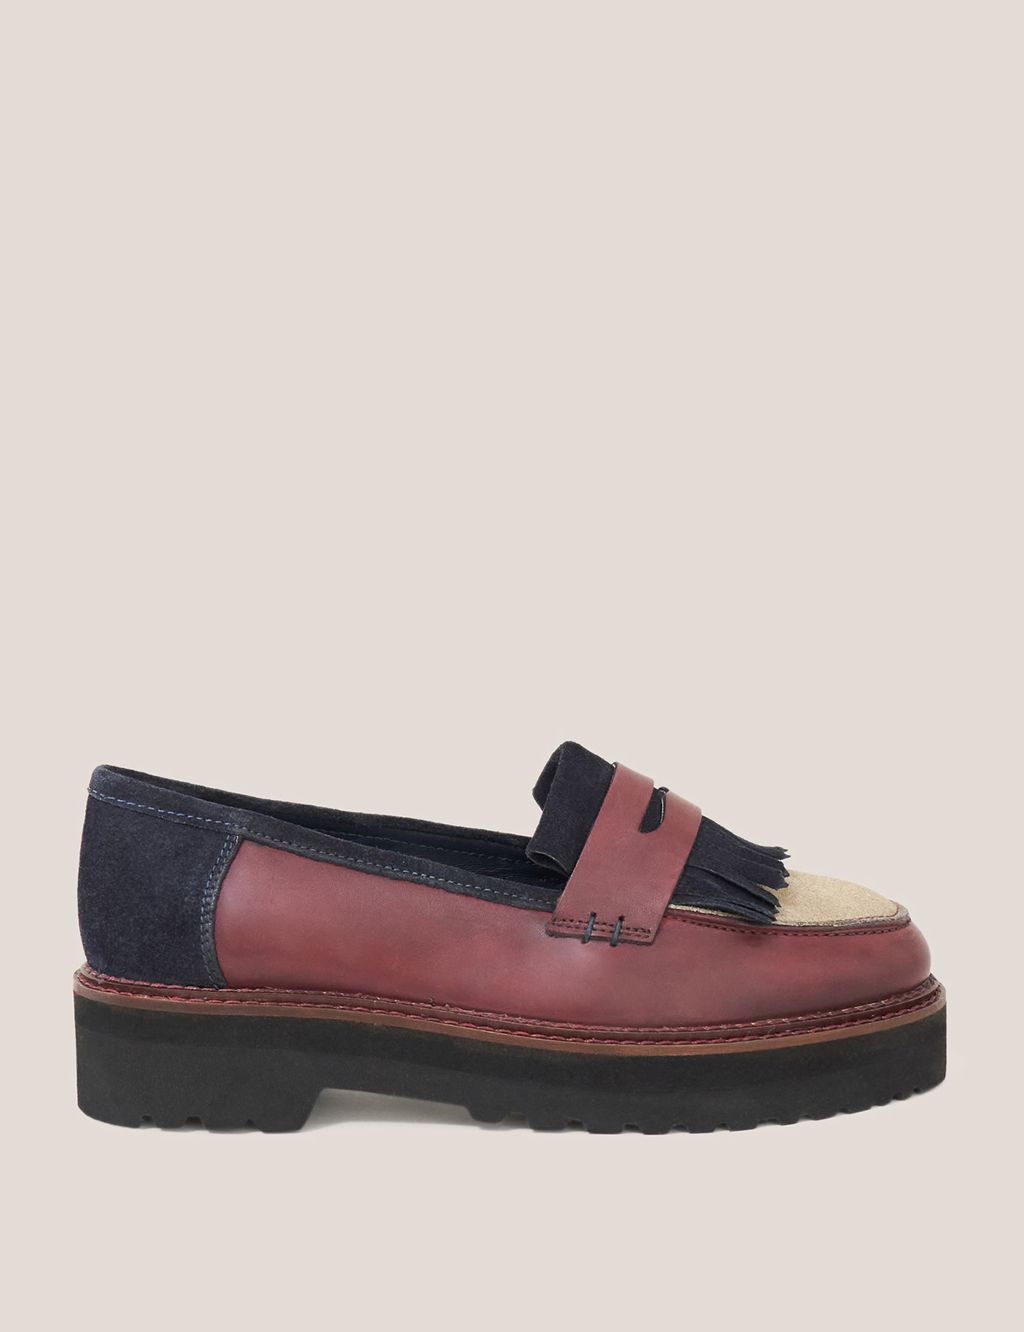 Leather Flatform Loafers image 1